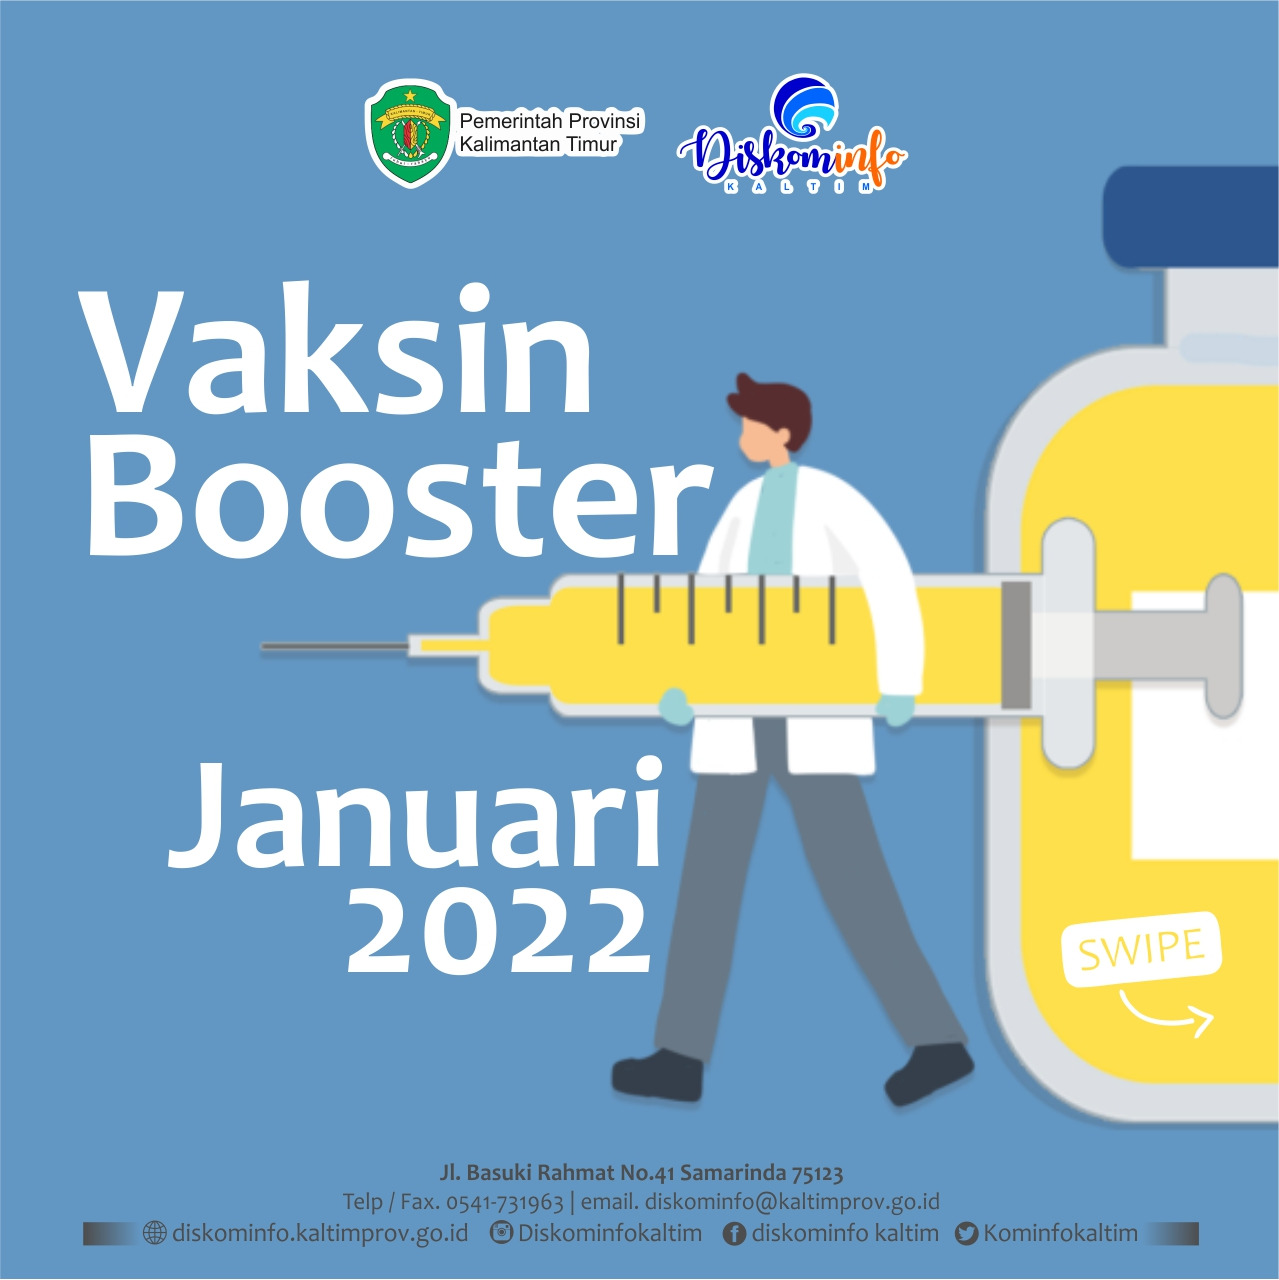 Tau Enggak Kementerian Kesehatan Terbitkan Surat Edaran Terkait Ketentuan Pelaksanaan Vaksin Booster Pada Januari 2022.